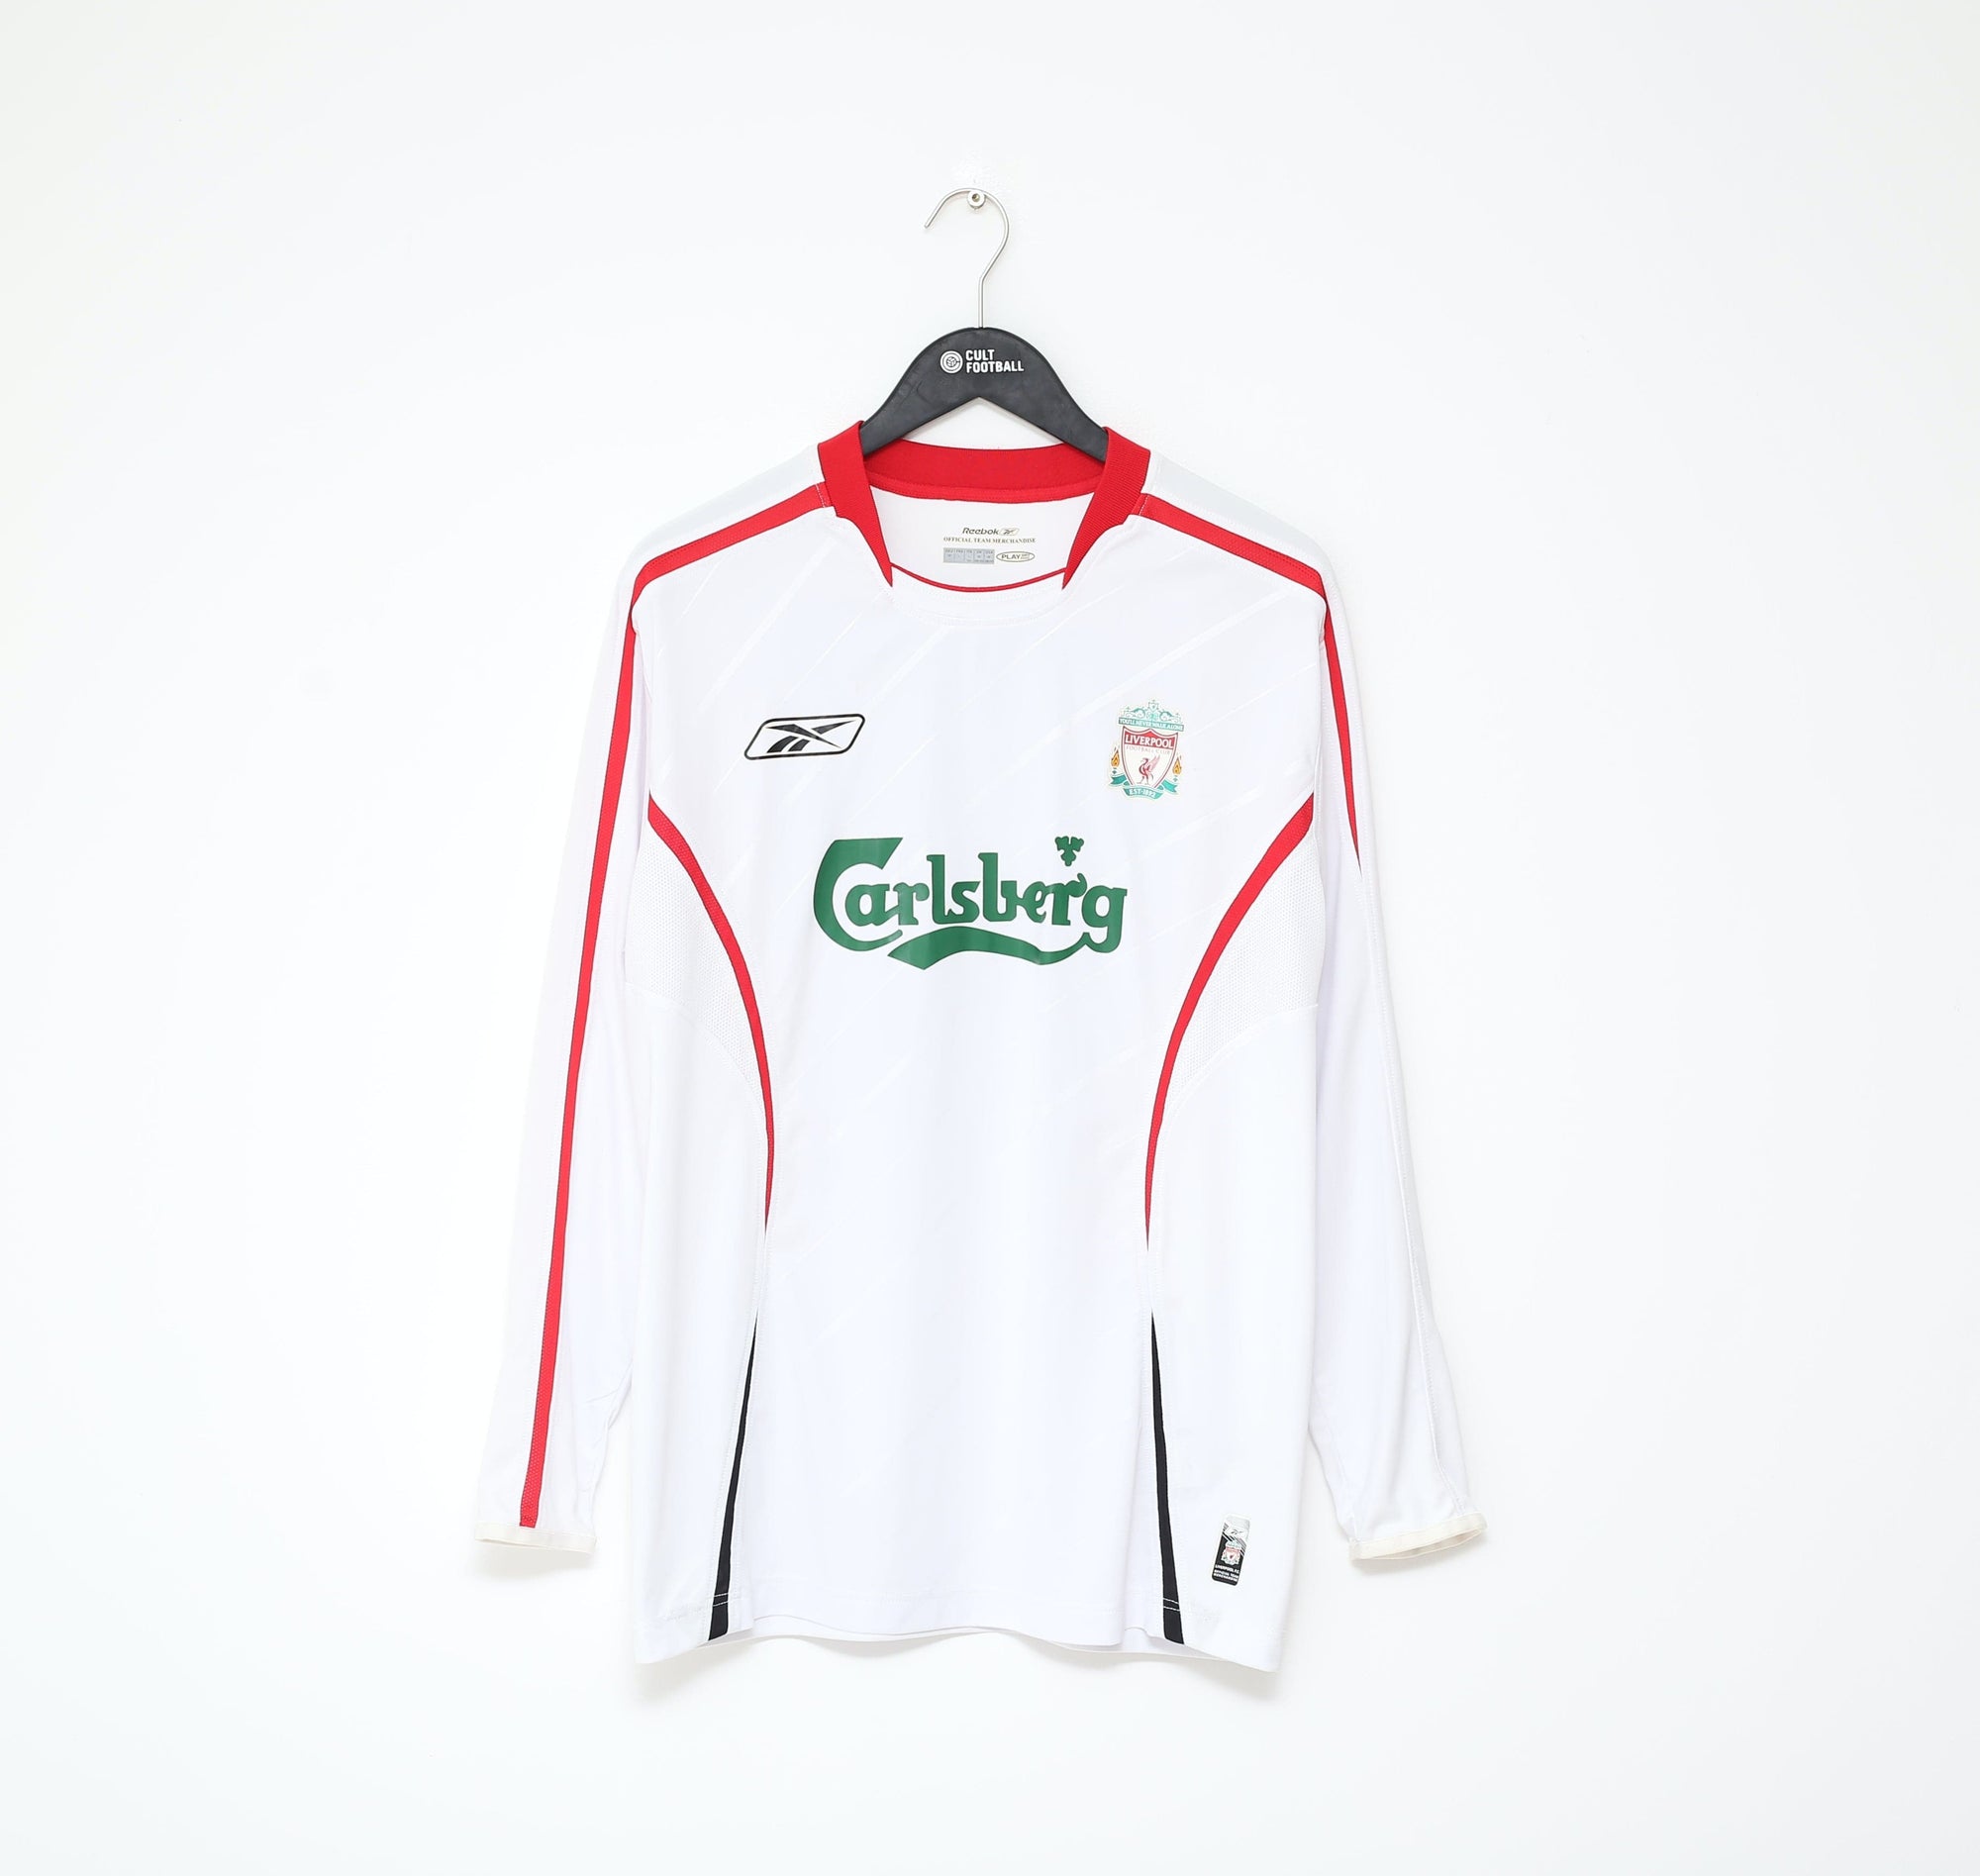 2005/06 FOWLER #11 Liverpool Vintage Reebok Away Football Shirt LS Jersey (M)